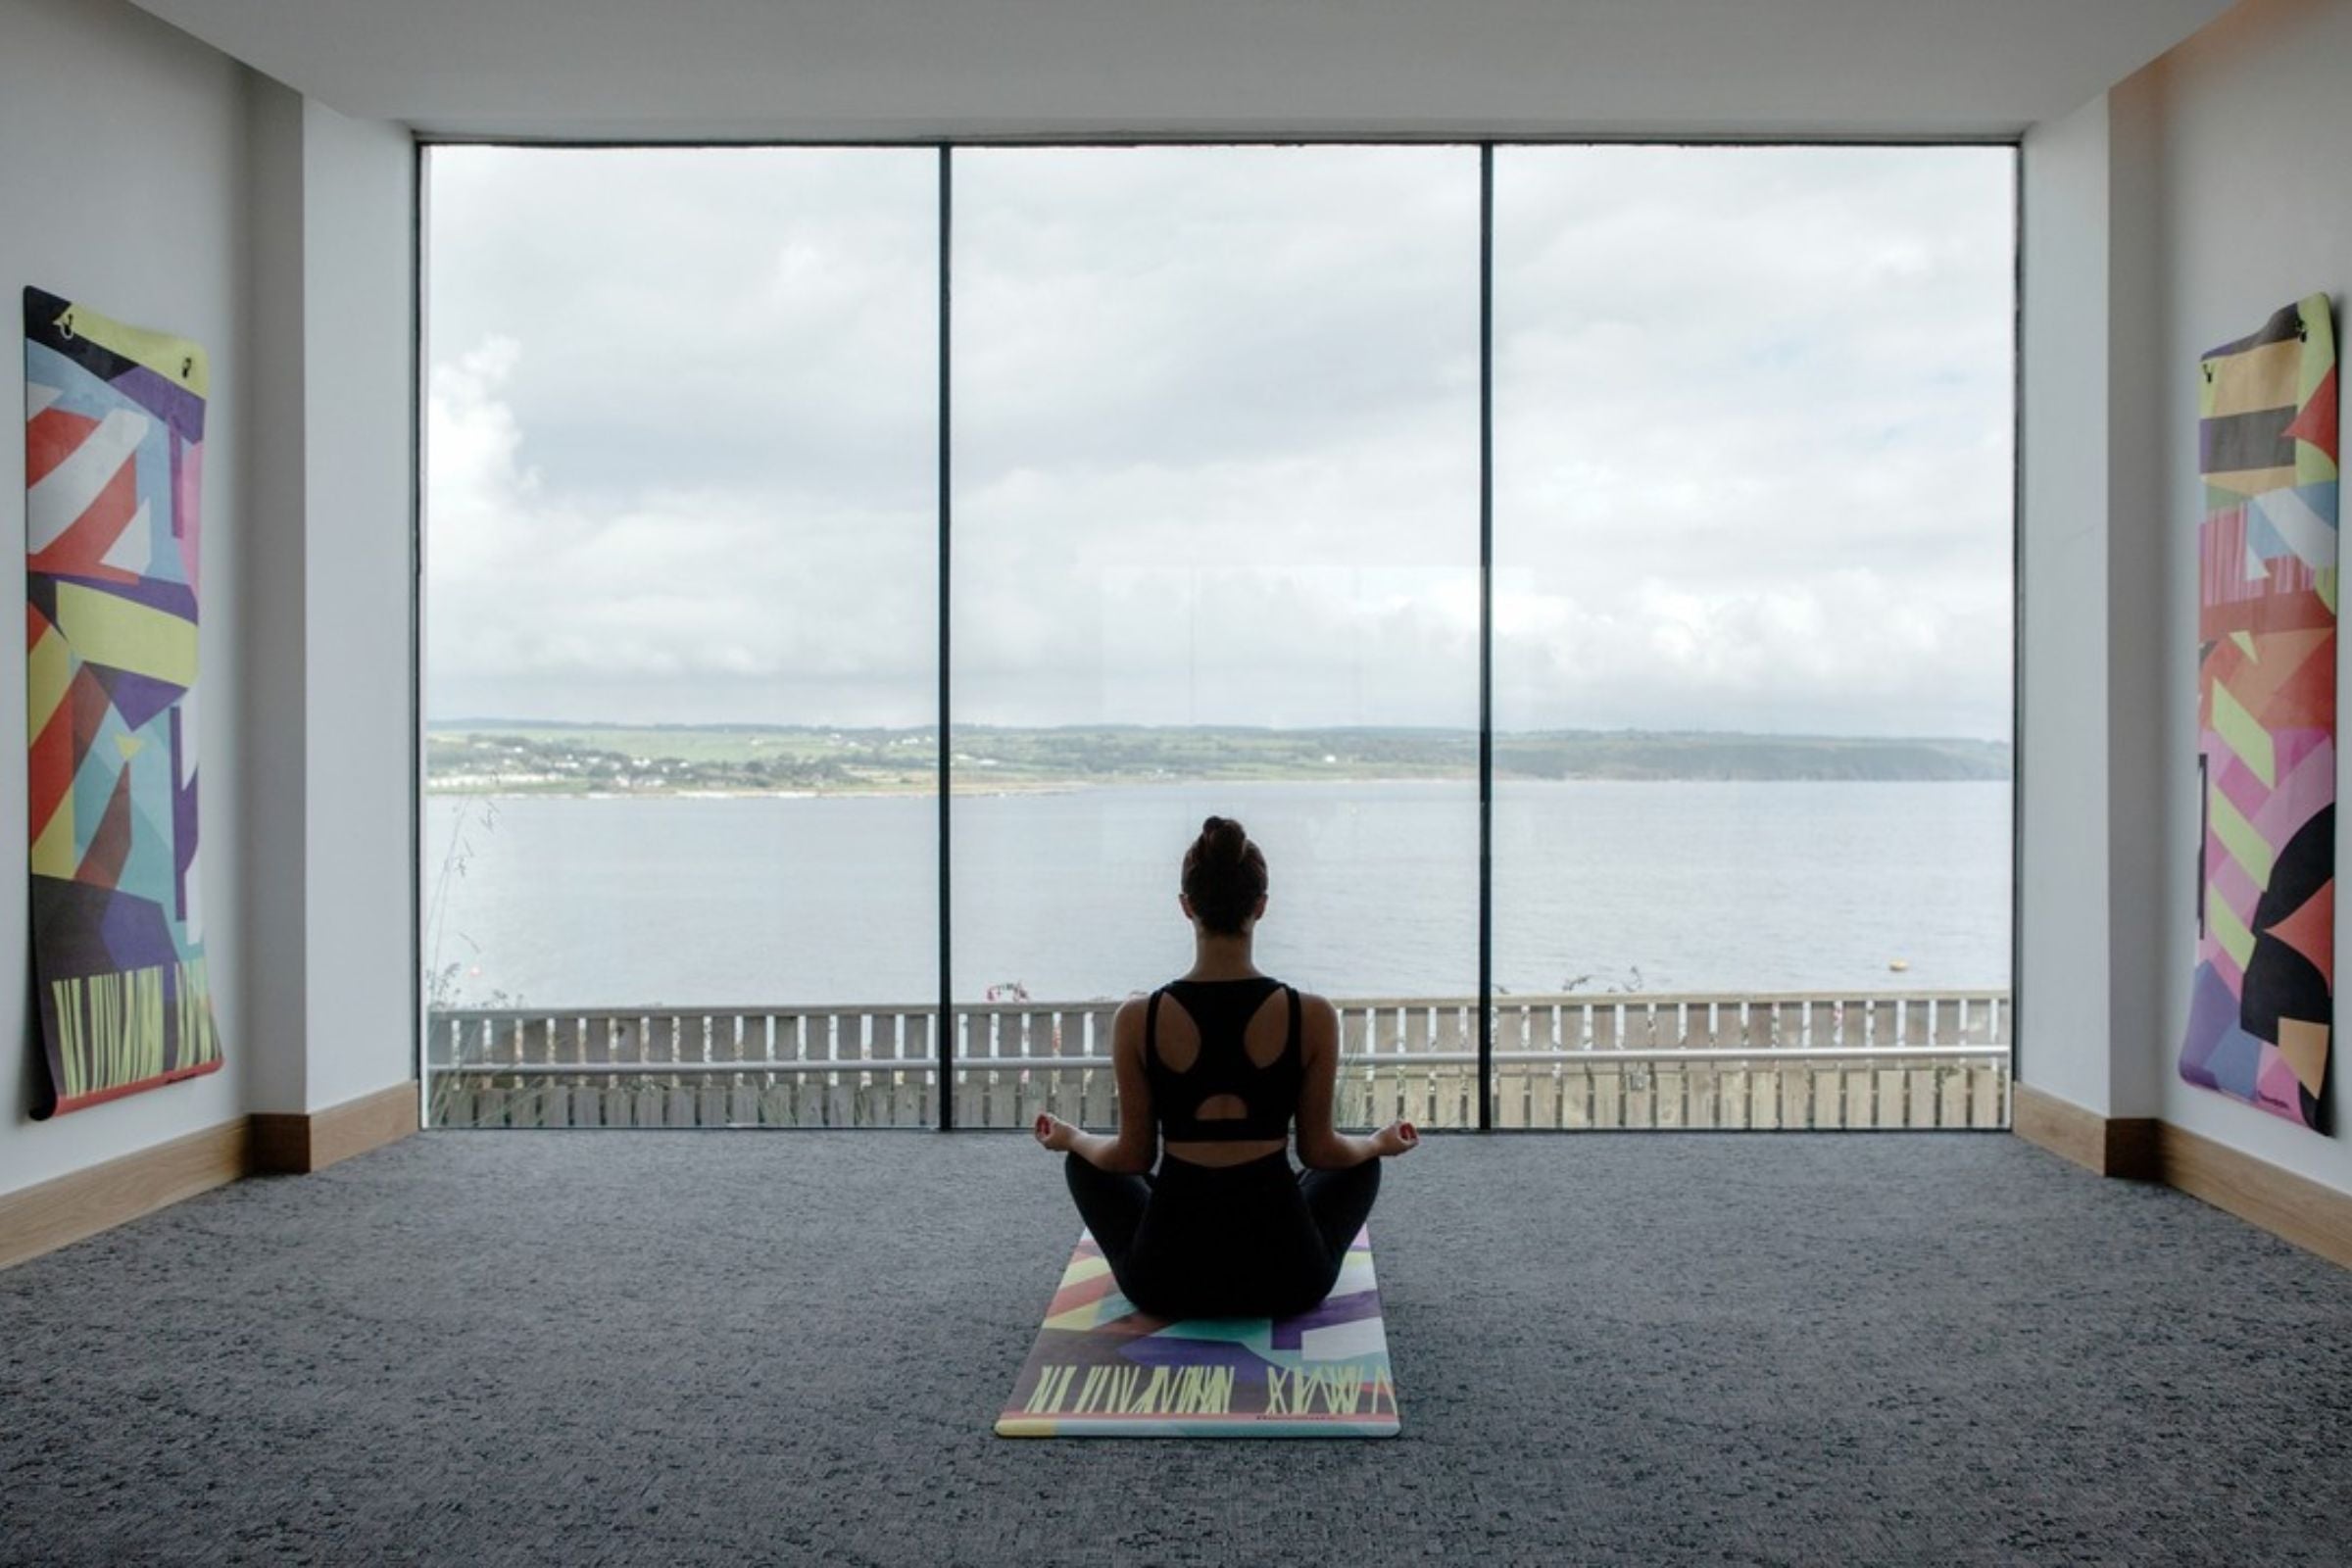 Hotpod Yoga: everything you need to know London's latest yoga craze, London Evening Standard